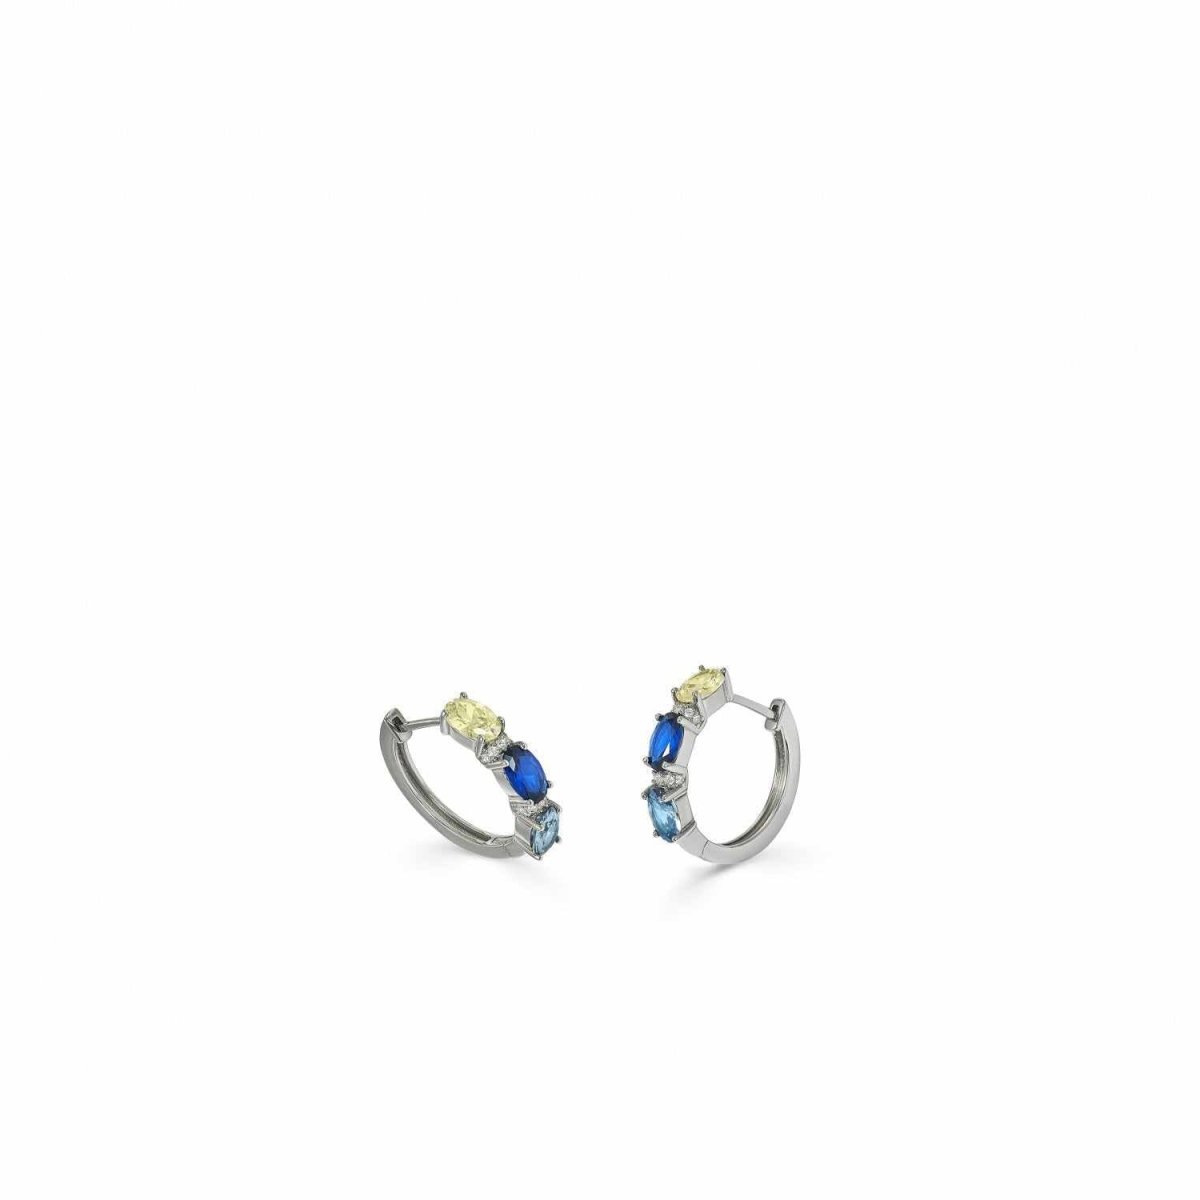 Earrings - Small silver hoop earrings with blue design